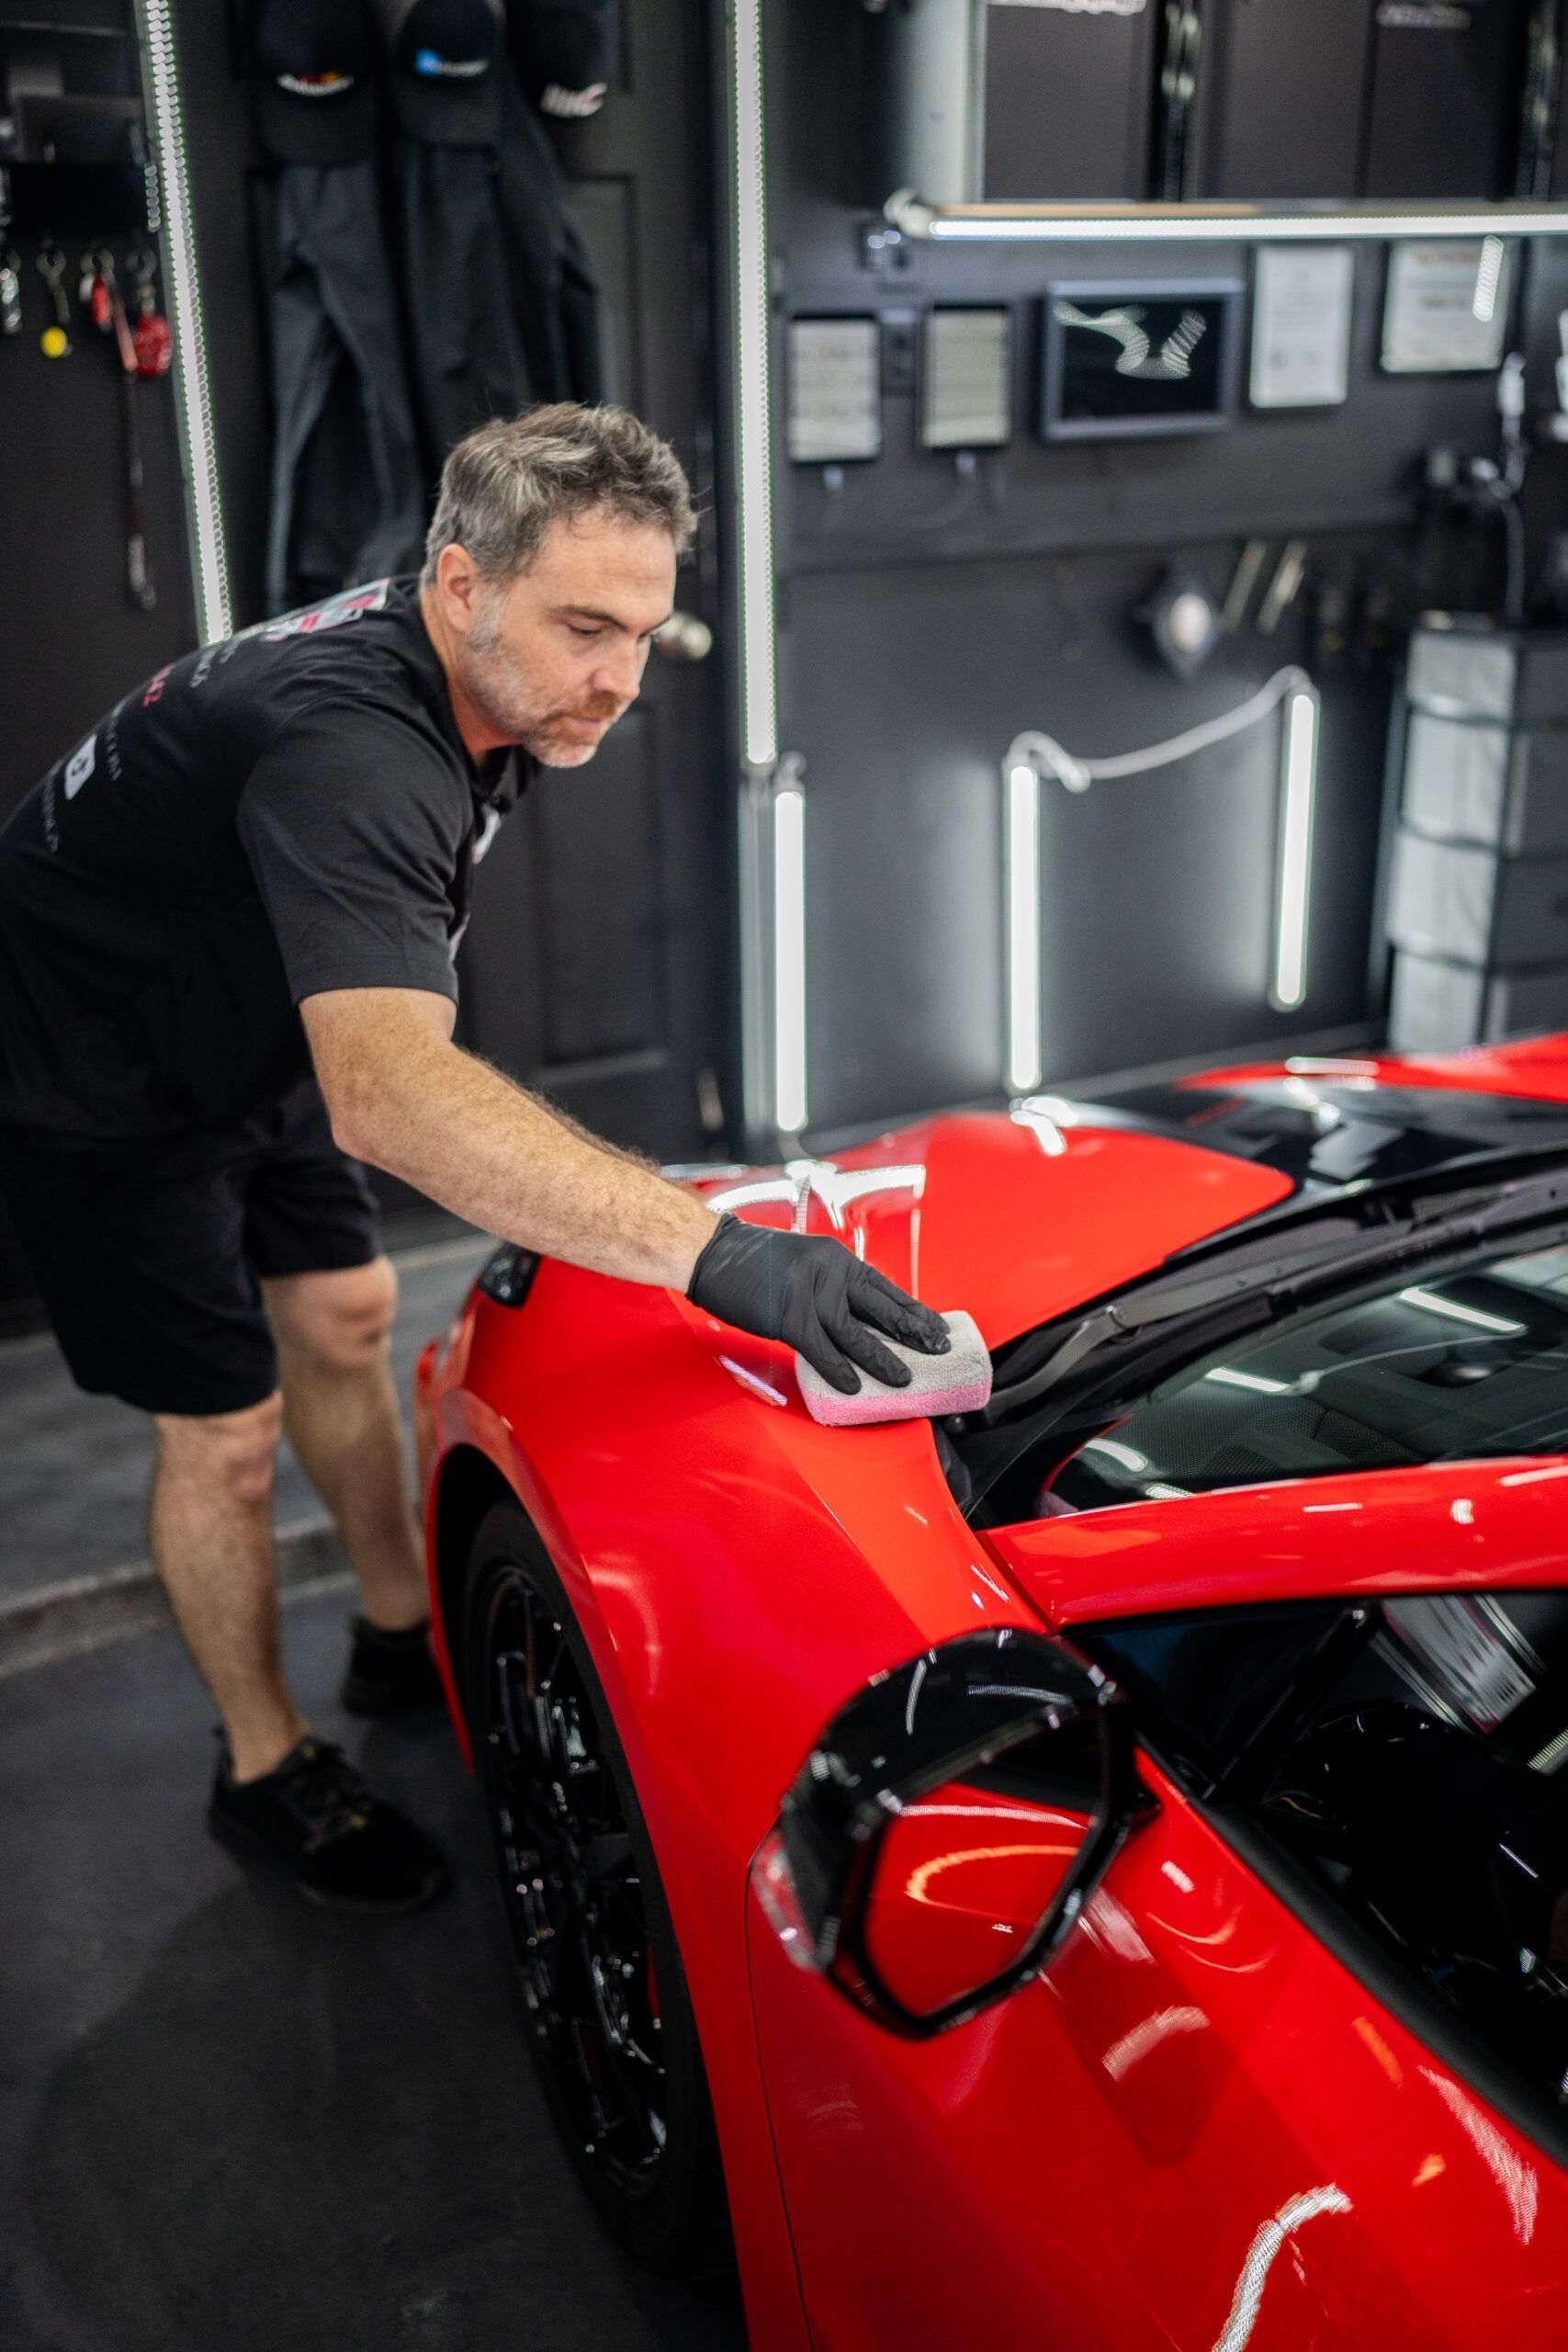 A man is polishing a red sports car in a garage.